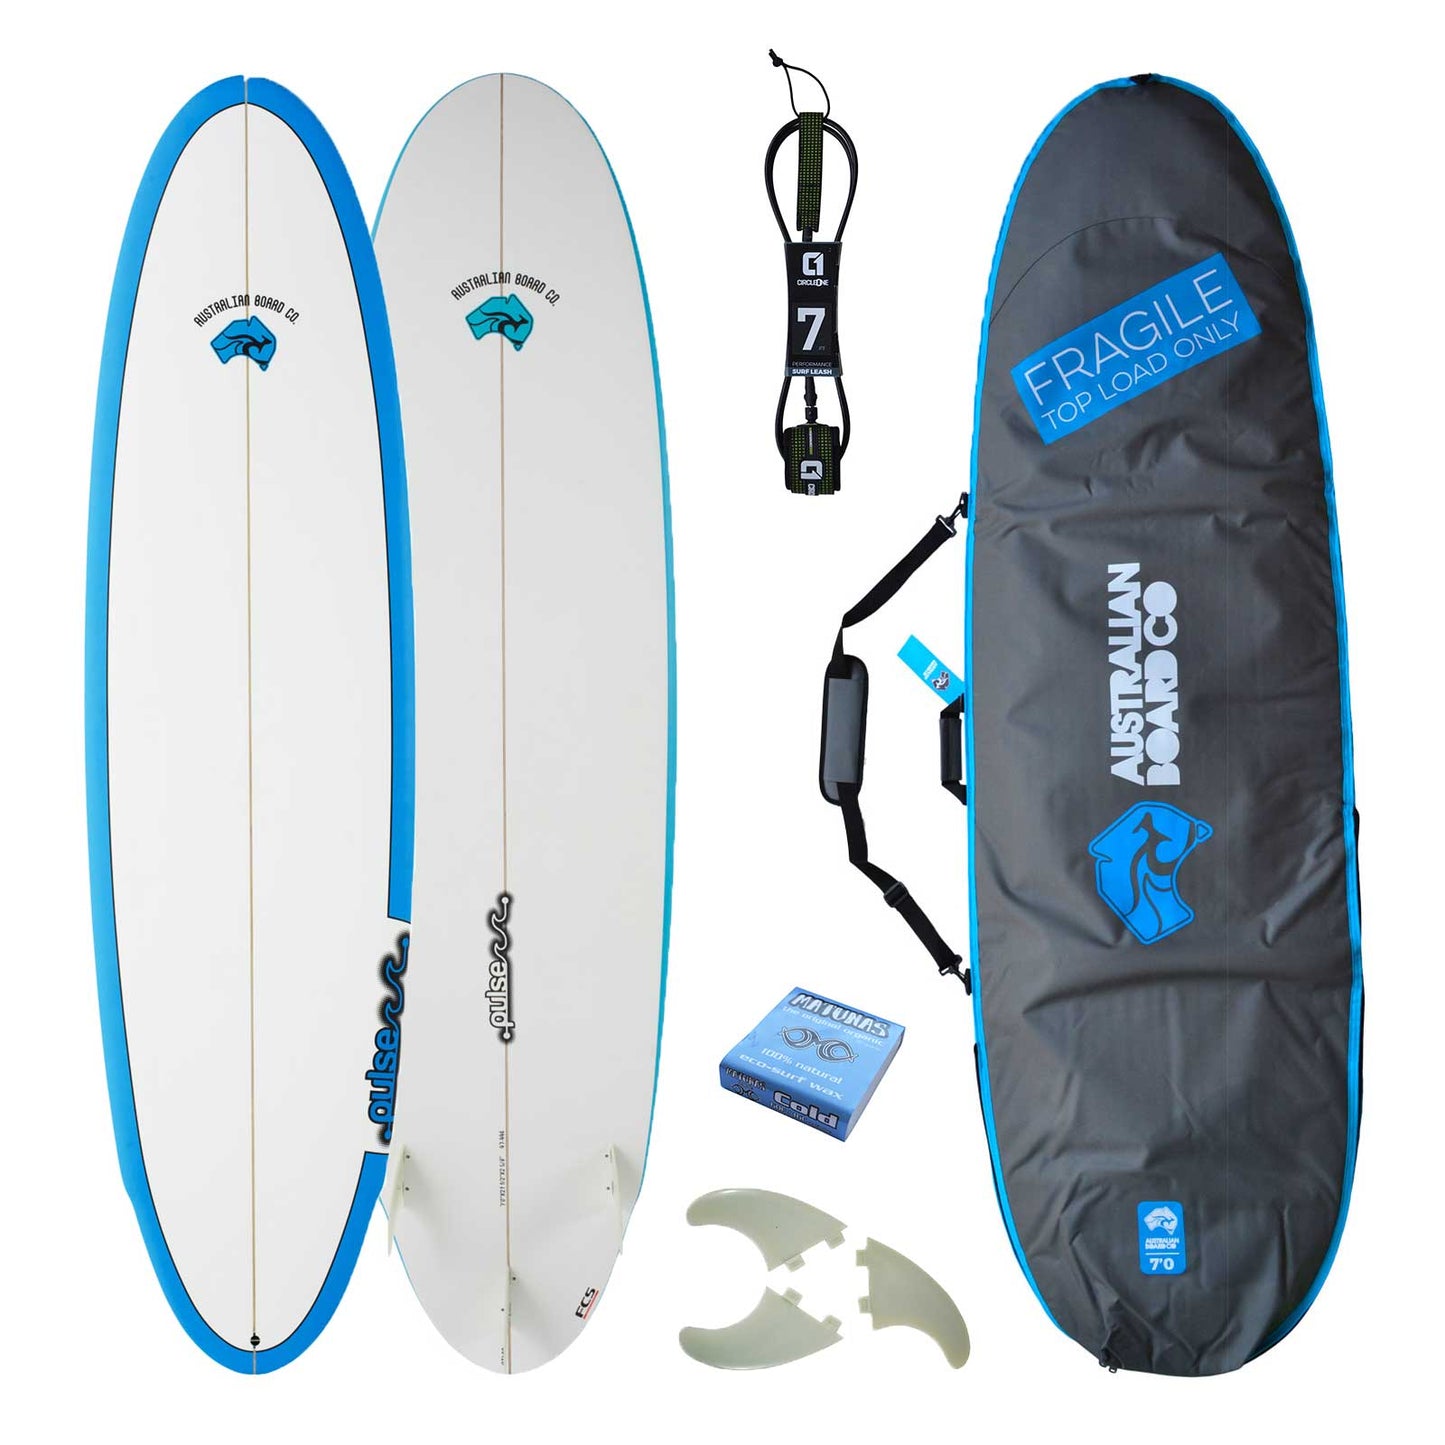 7ft Pulse Mini Mal Surfboard by Australian Board Company Package – Includes Bag, Fins & Leash